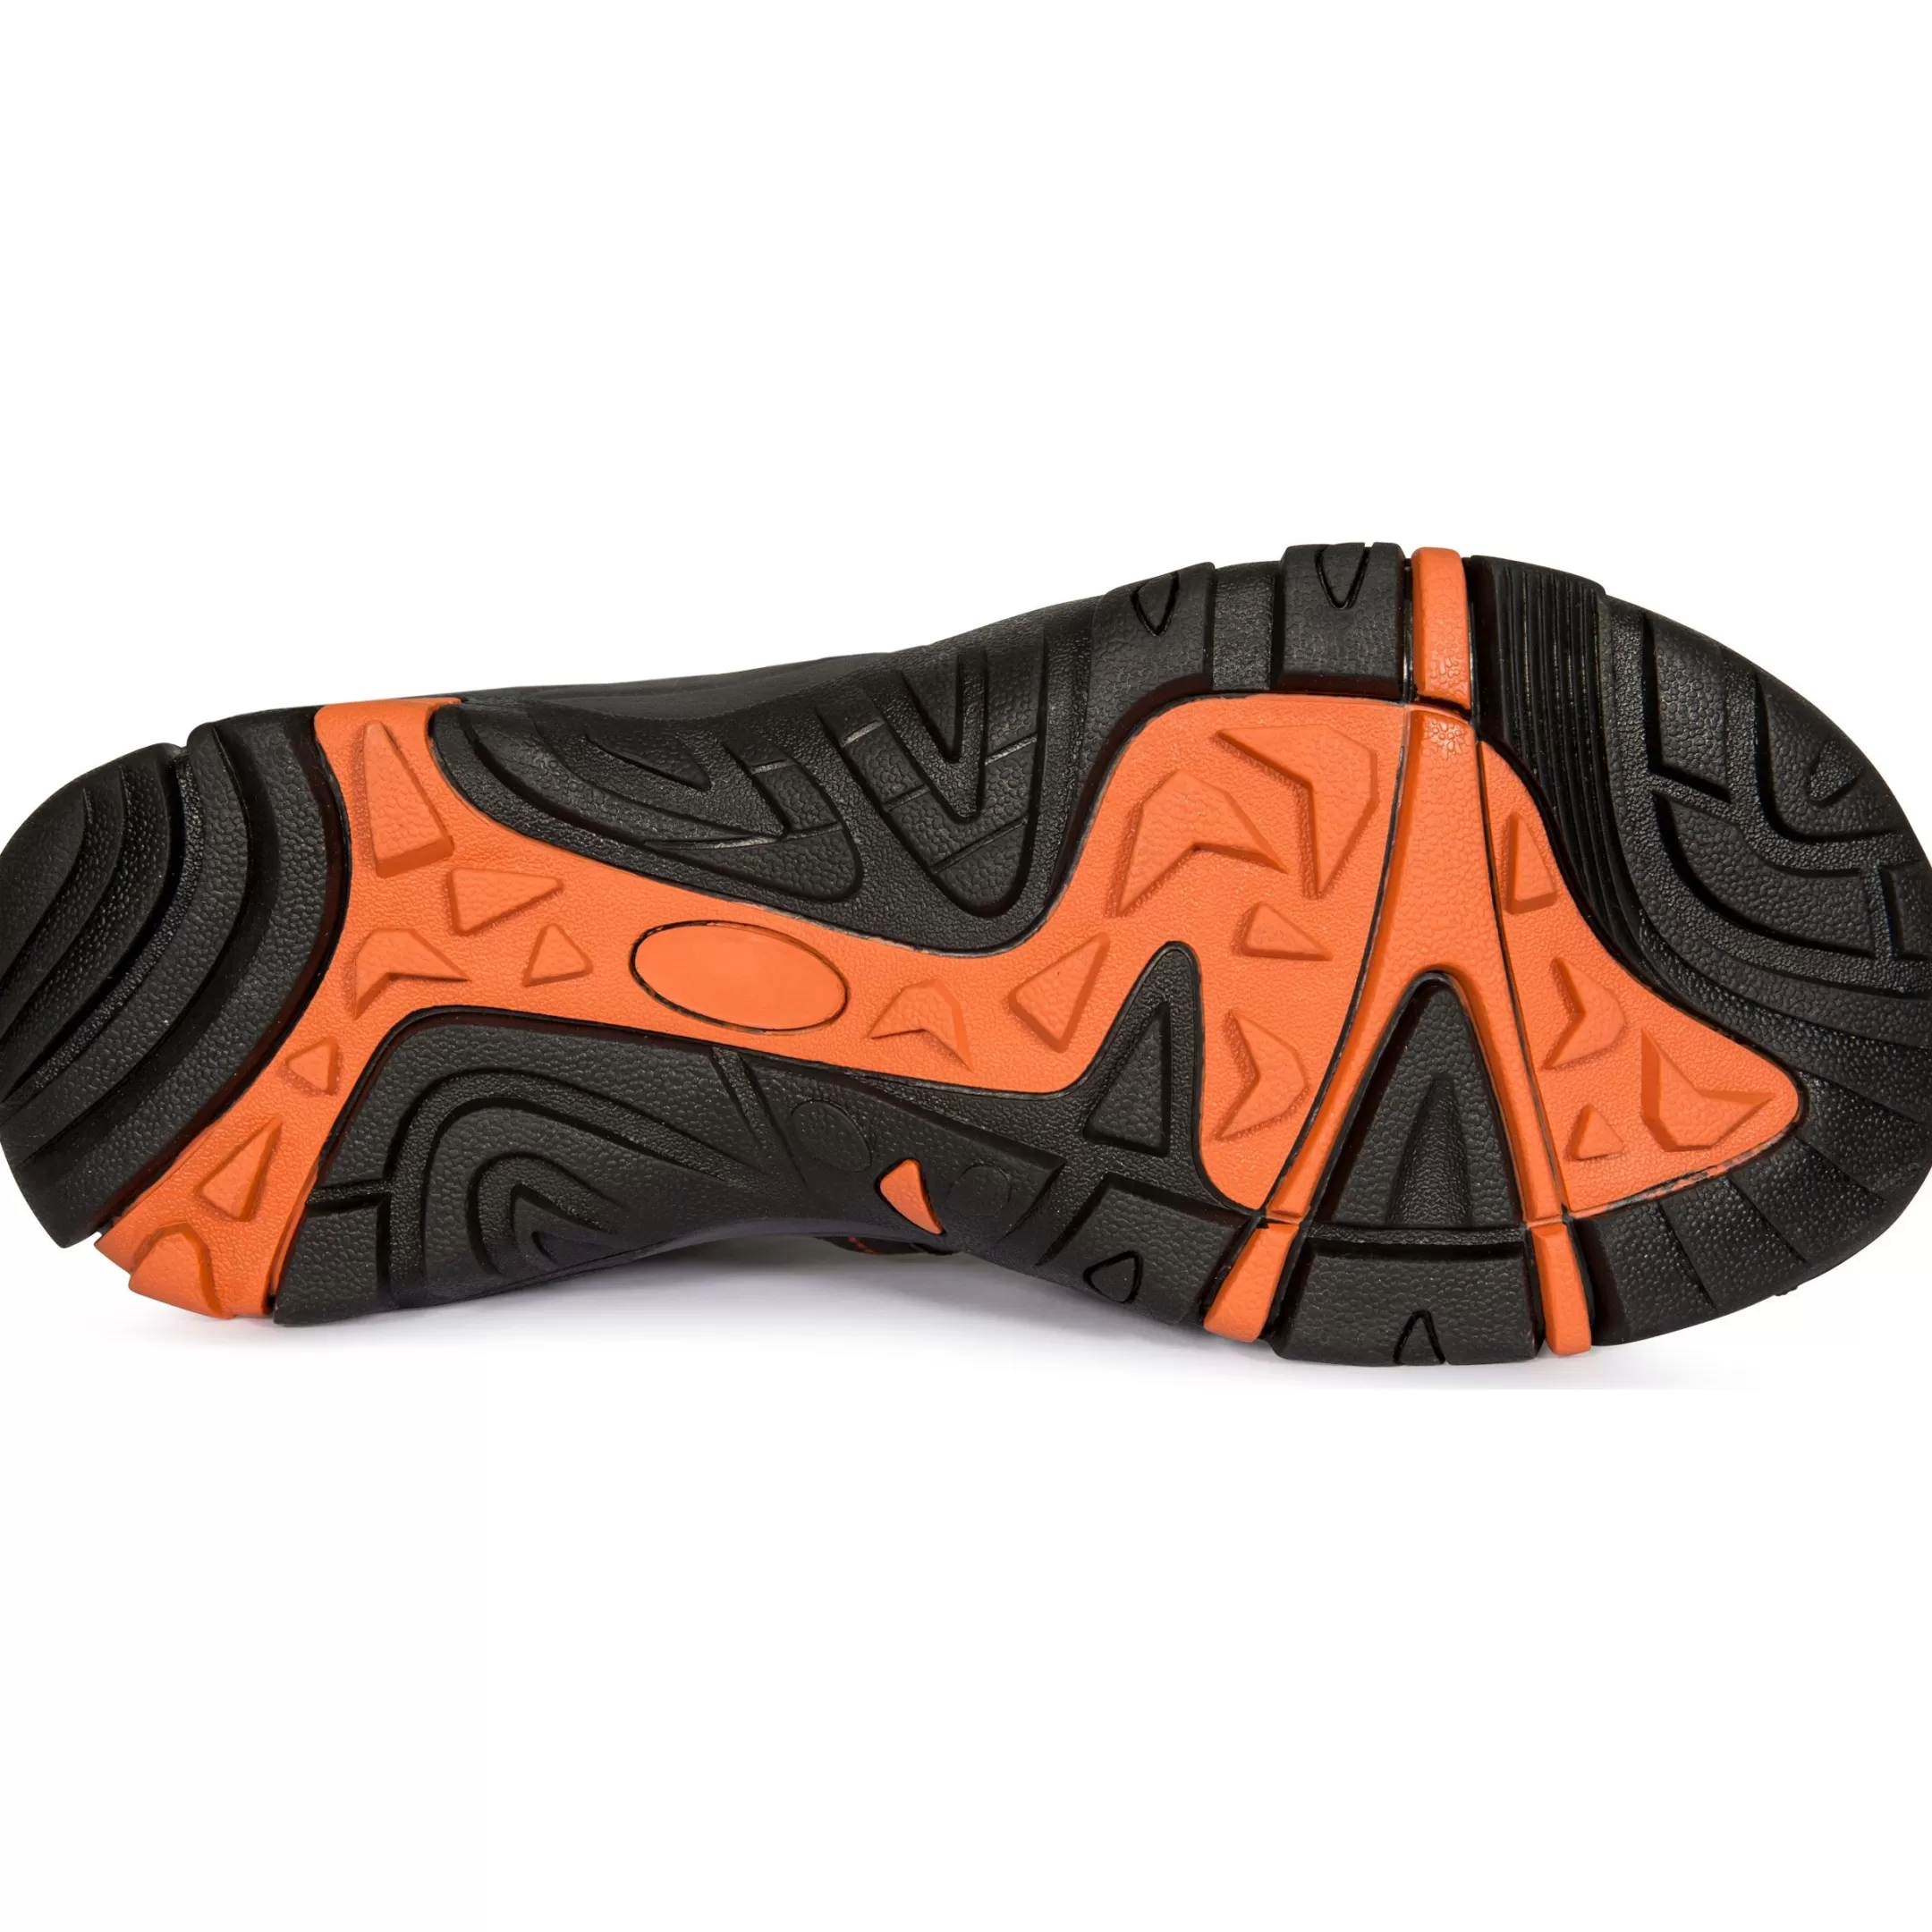 Men's Closed Toe Walking Sandals Torrance | Trespass Discount